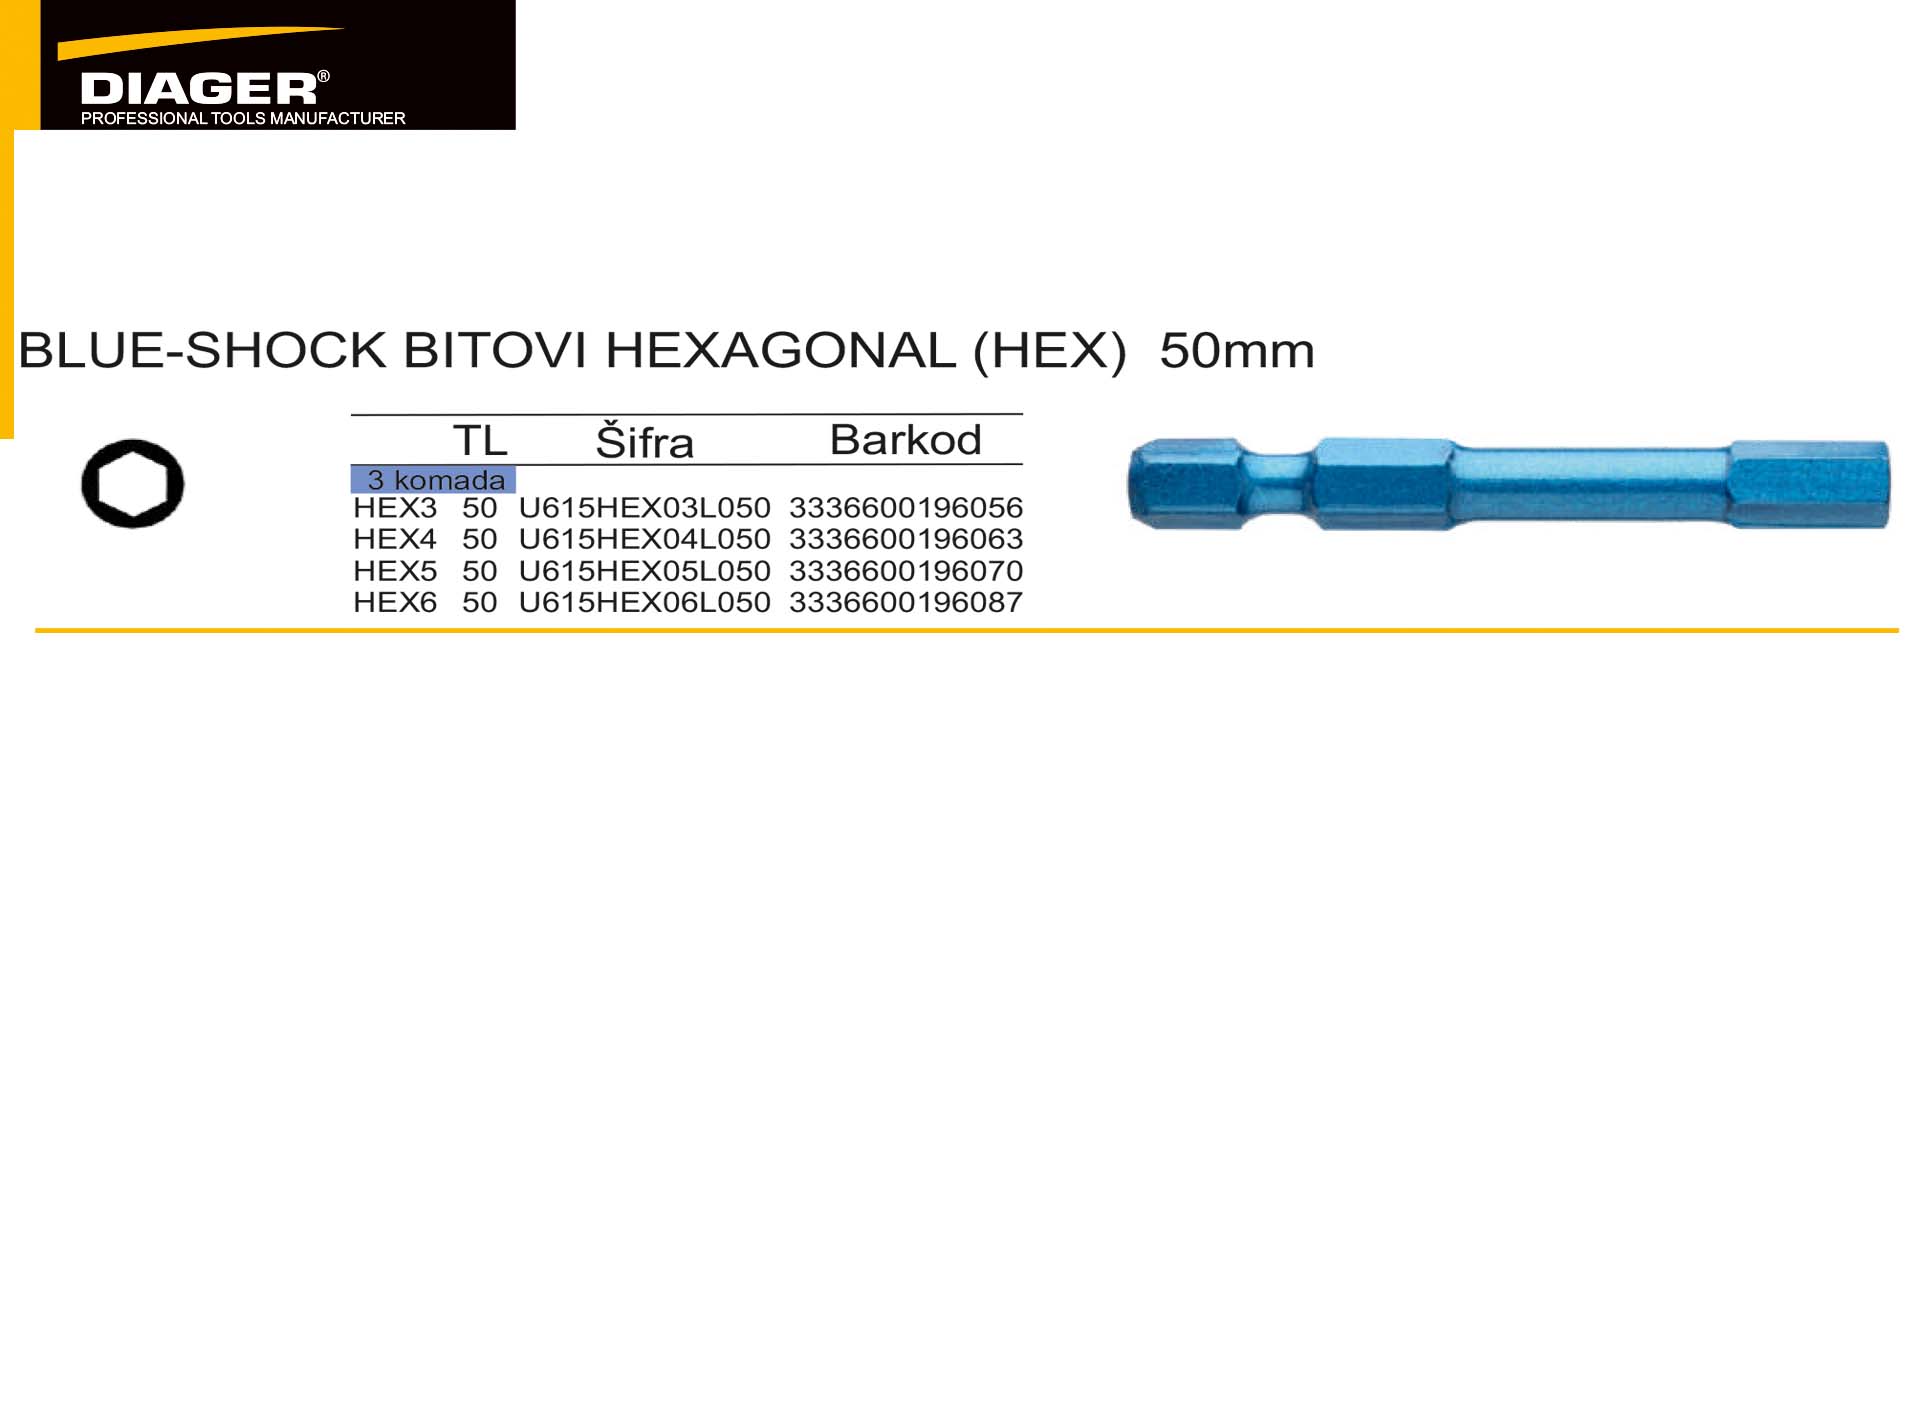 BLUE-SHOCK BITOVI HEXAGONAL (HEX) 50mm